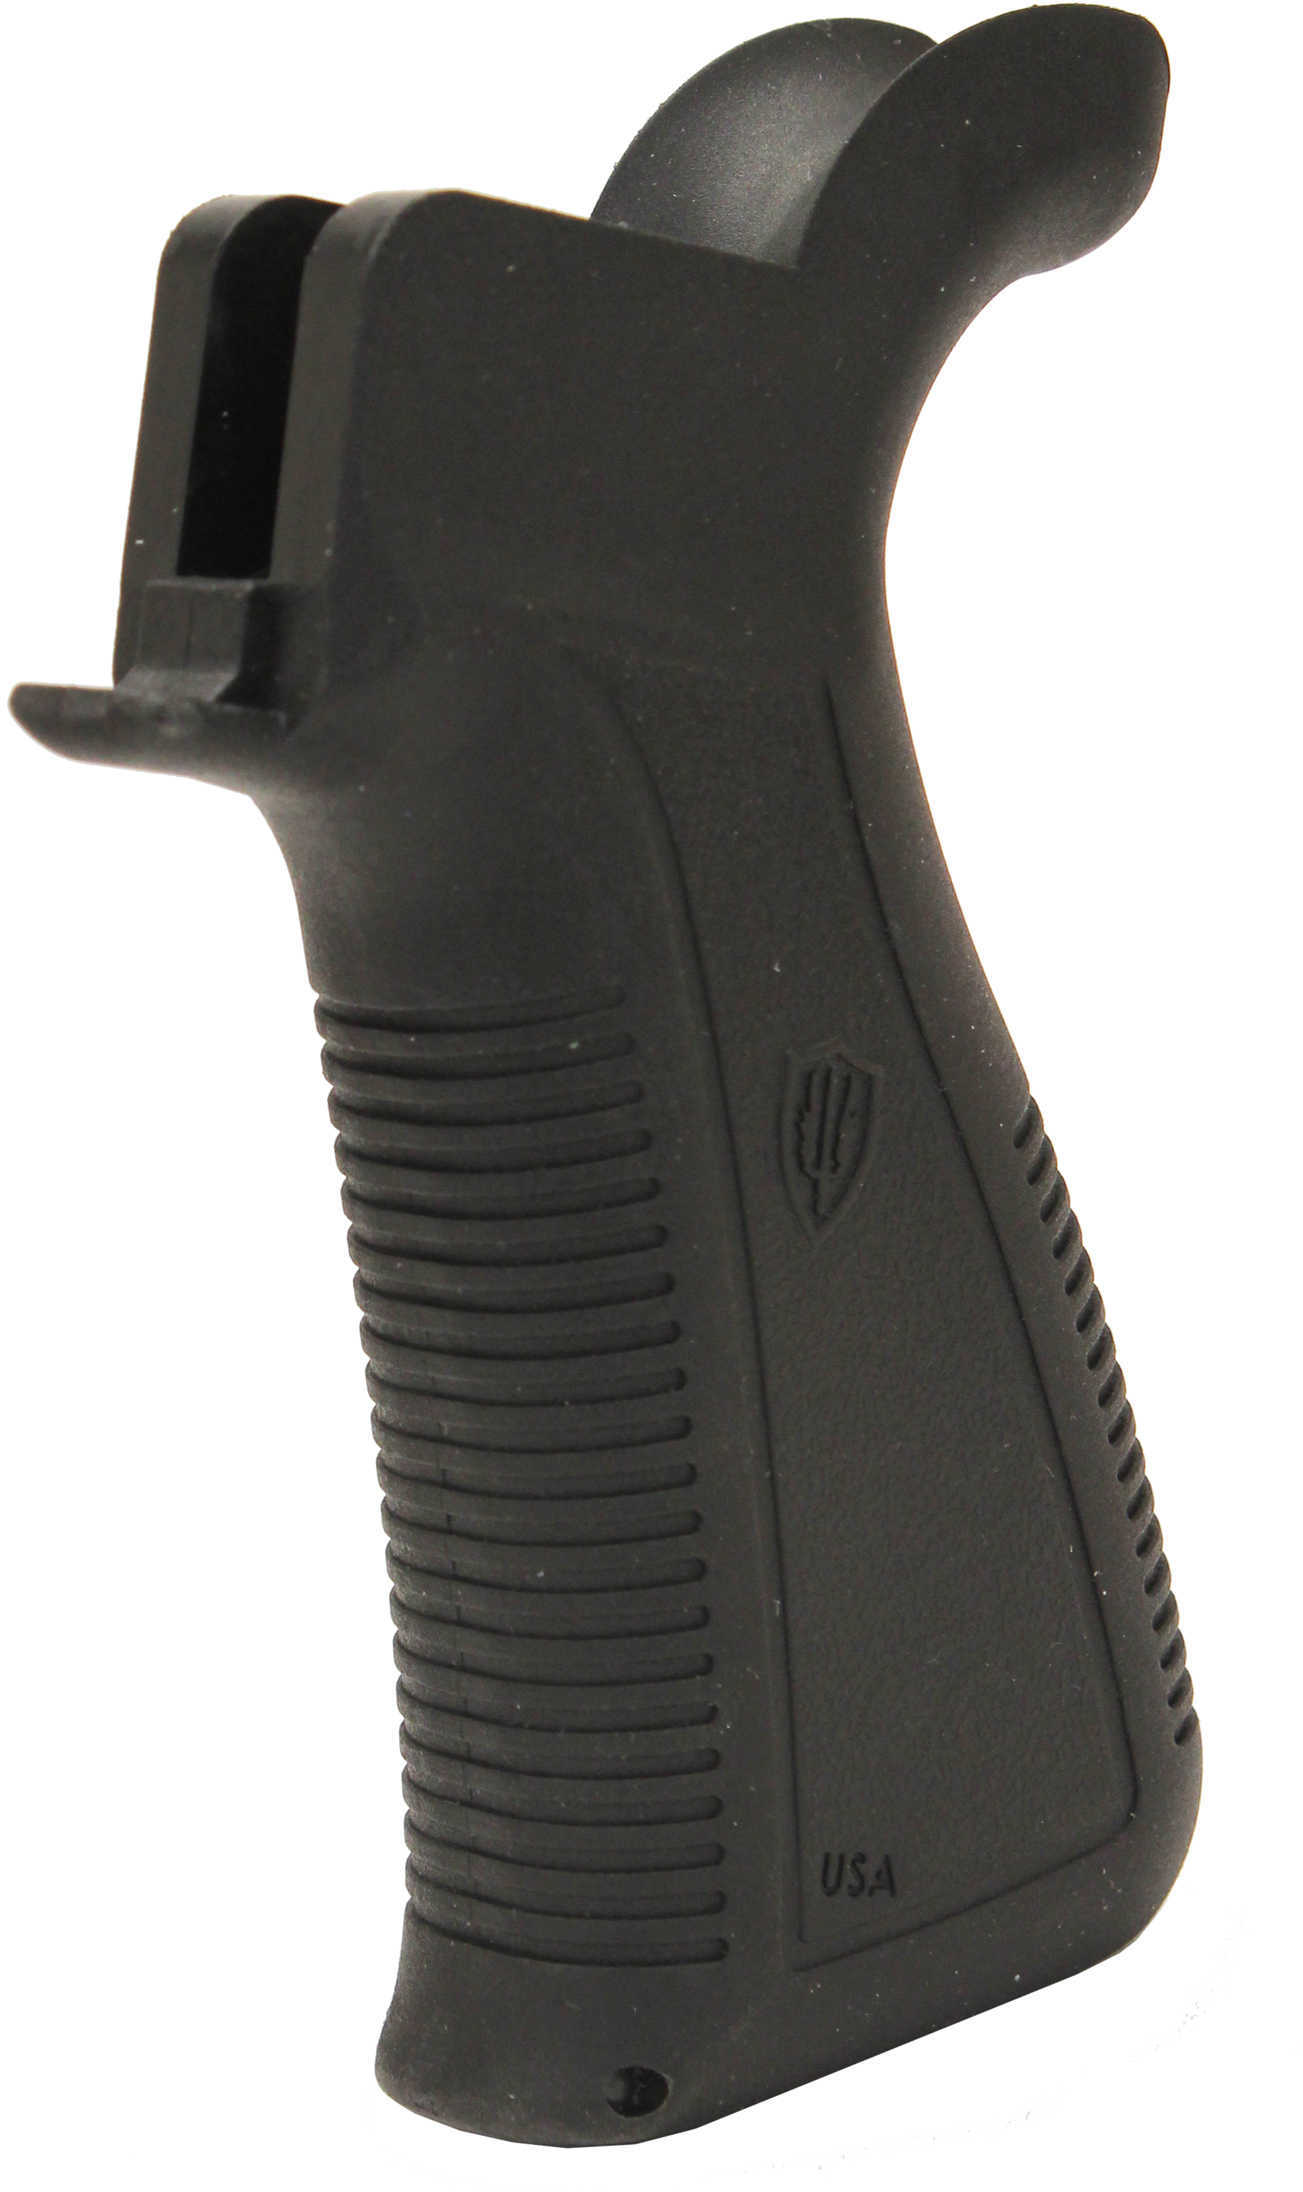 ProMag AR-15 Pistol Grip/Trigger Guard Md: AA15